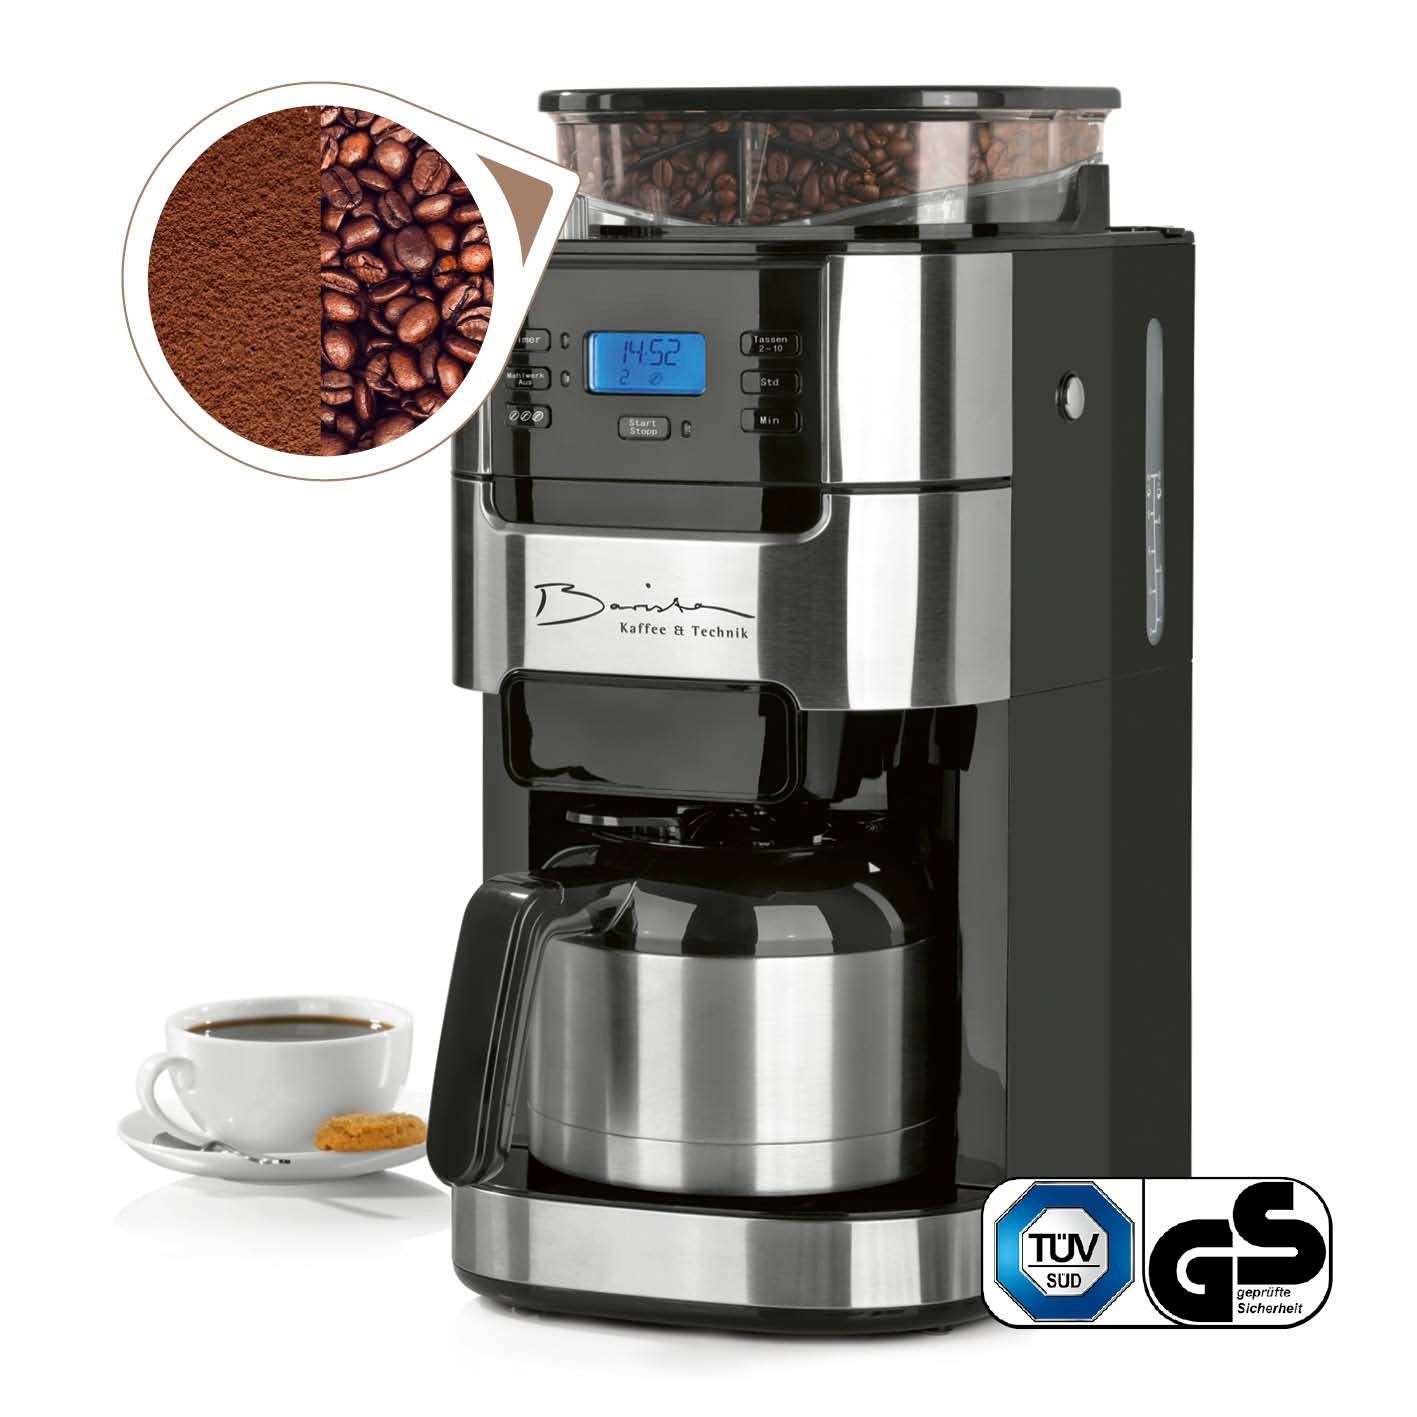 Kaffeemaschine mit inkl. Mahlwerk Filterkaffeemaschine, Barista Kaffeekanne, 1l Isolierkanne